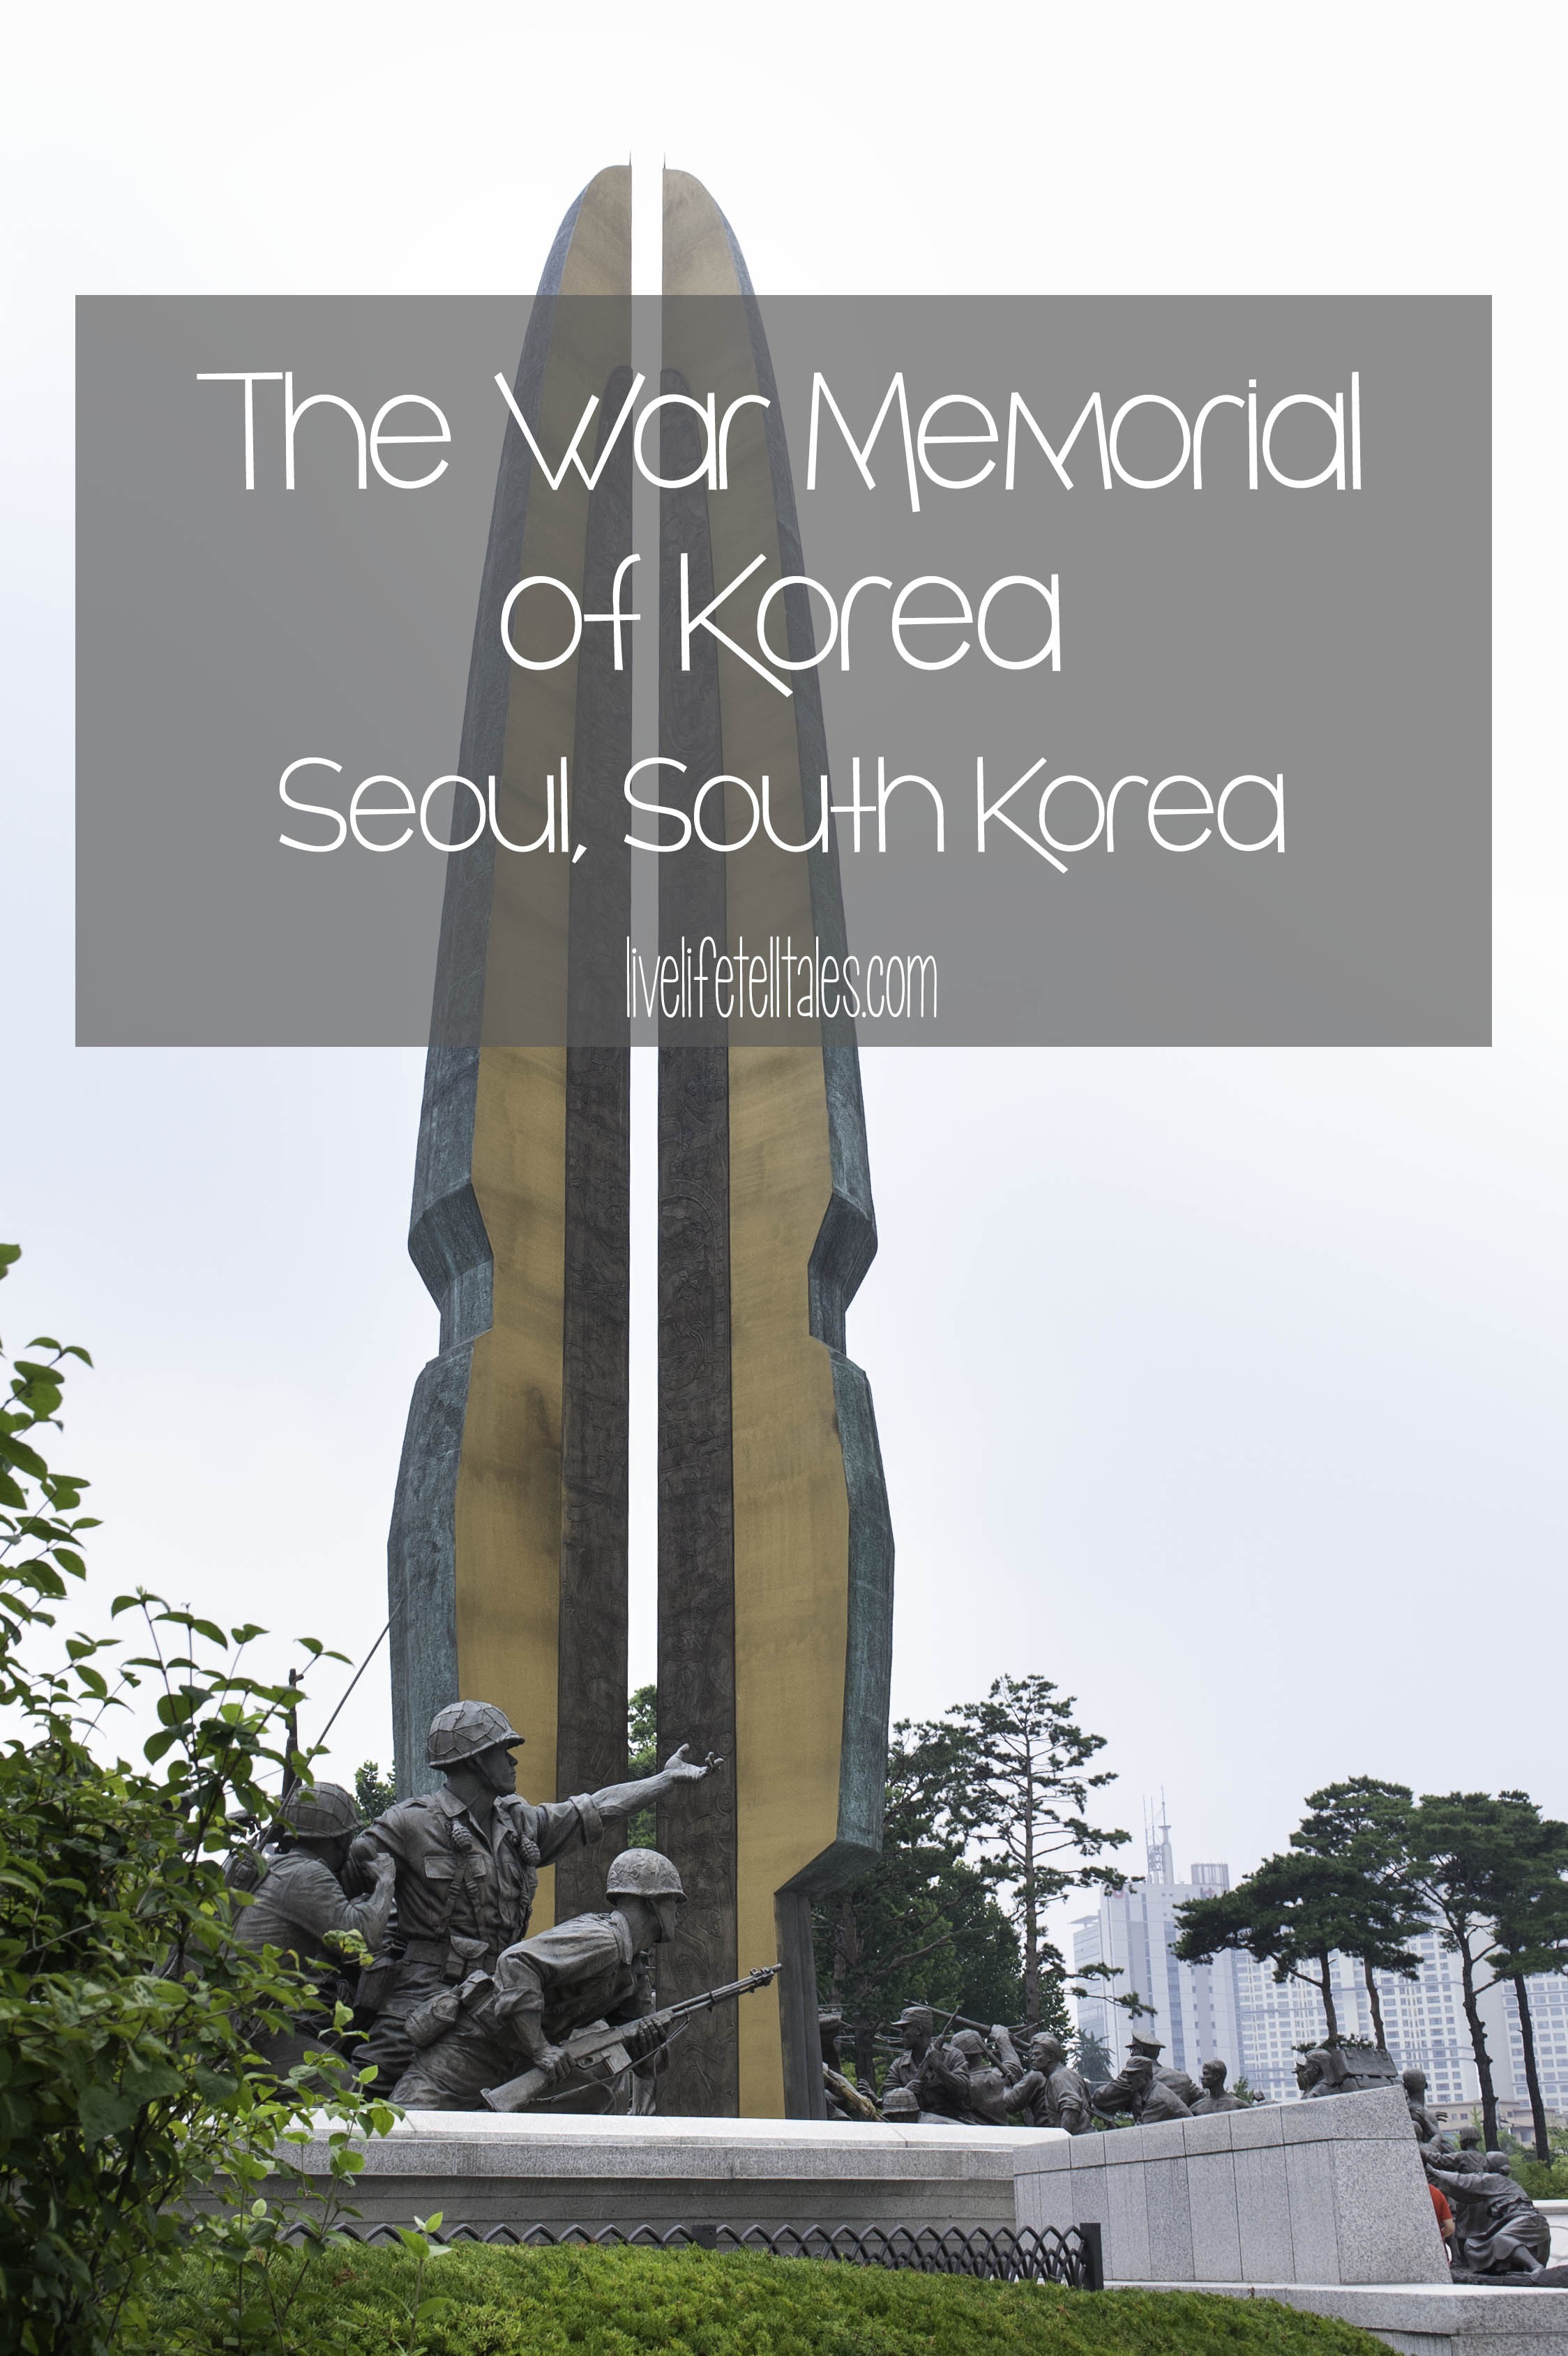 The War Memorial of Korea in Seoul, South Korea - Live Life Tell Tales